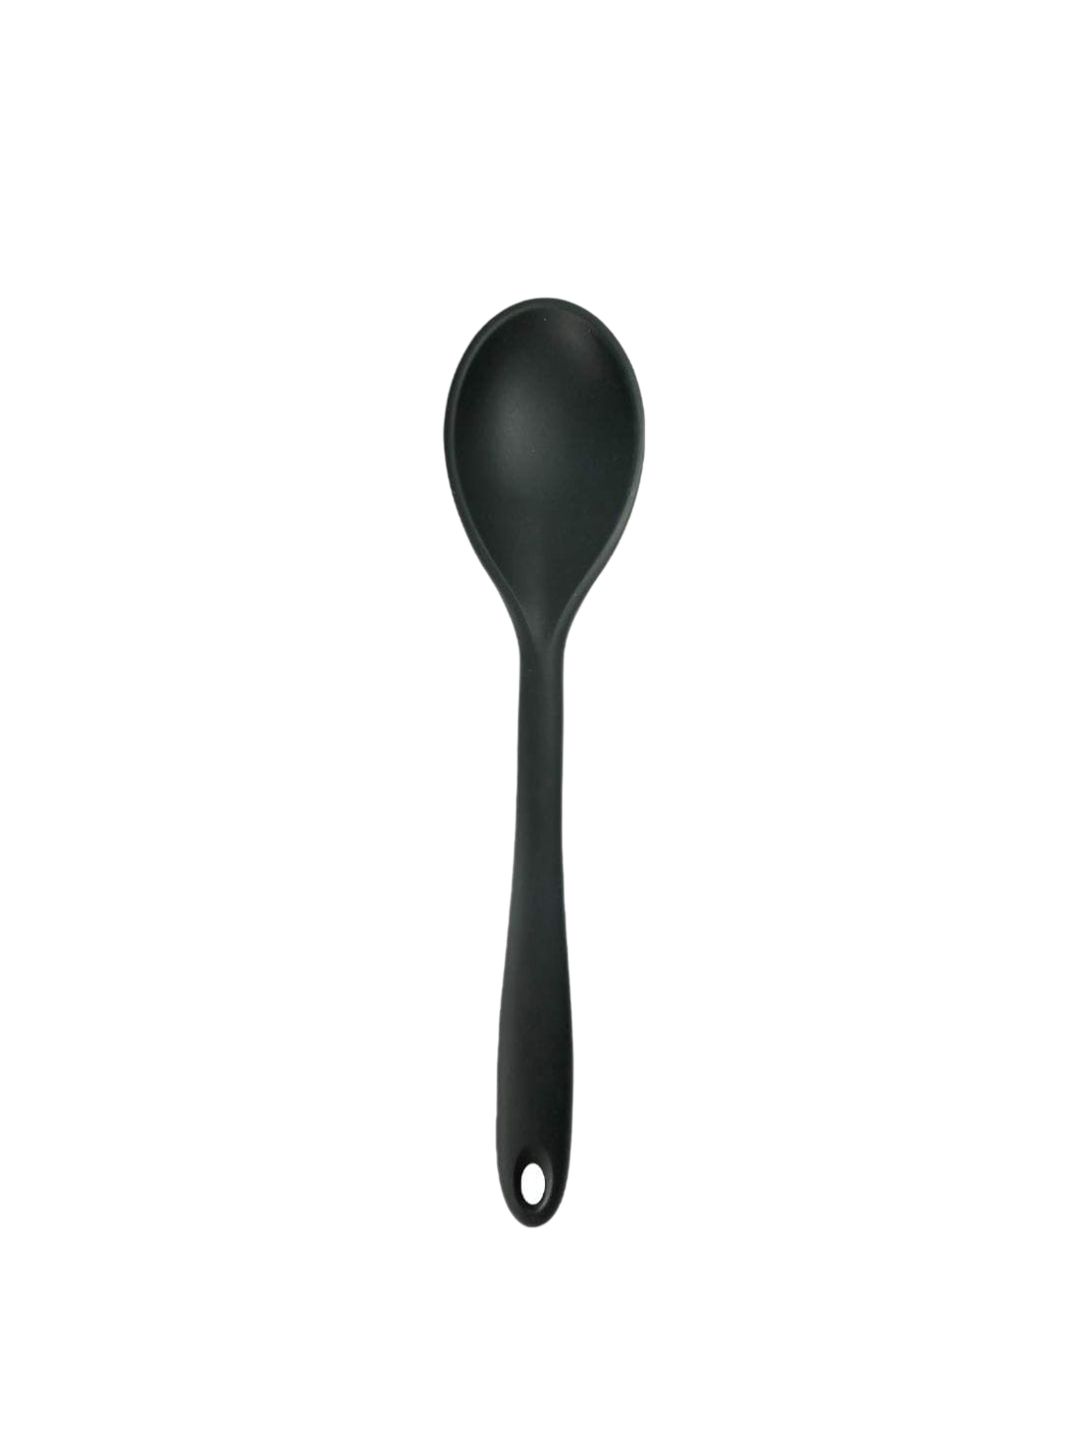 Wonderchef Black Solid Silicone Spoon Price in India